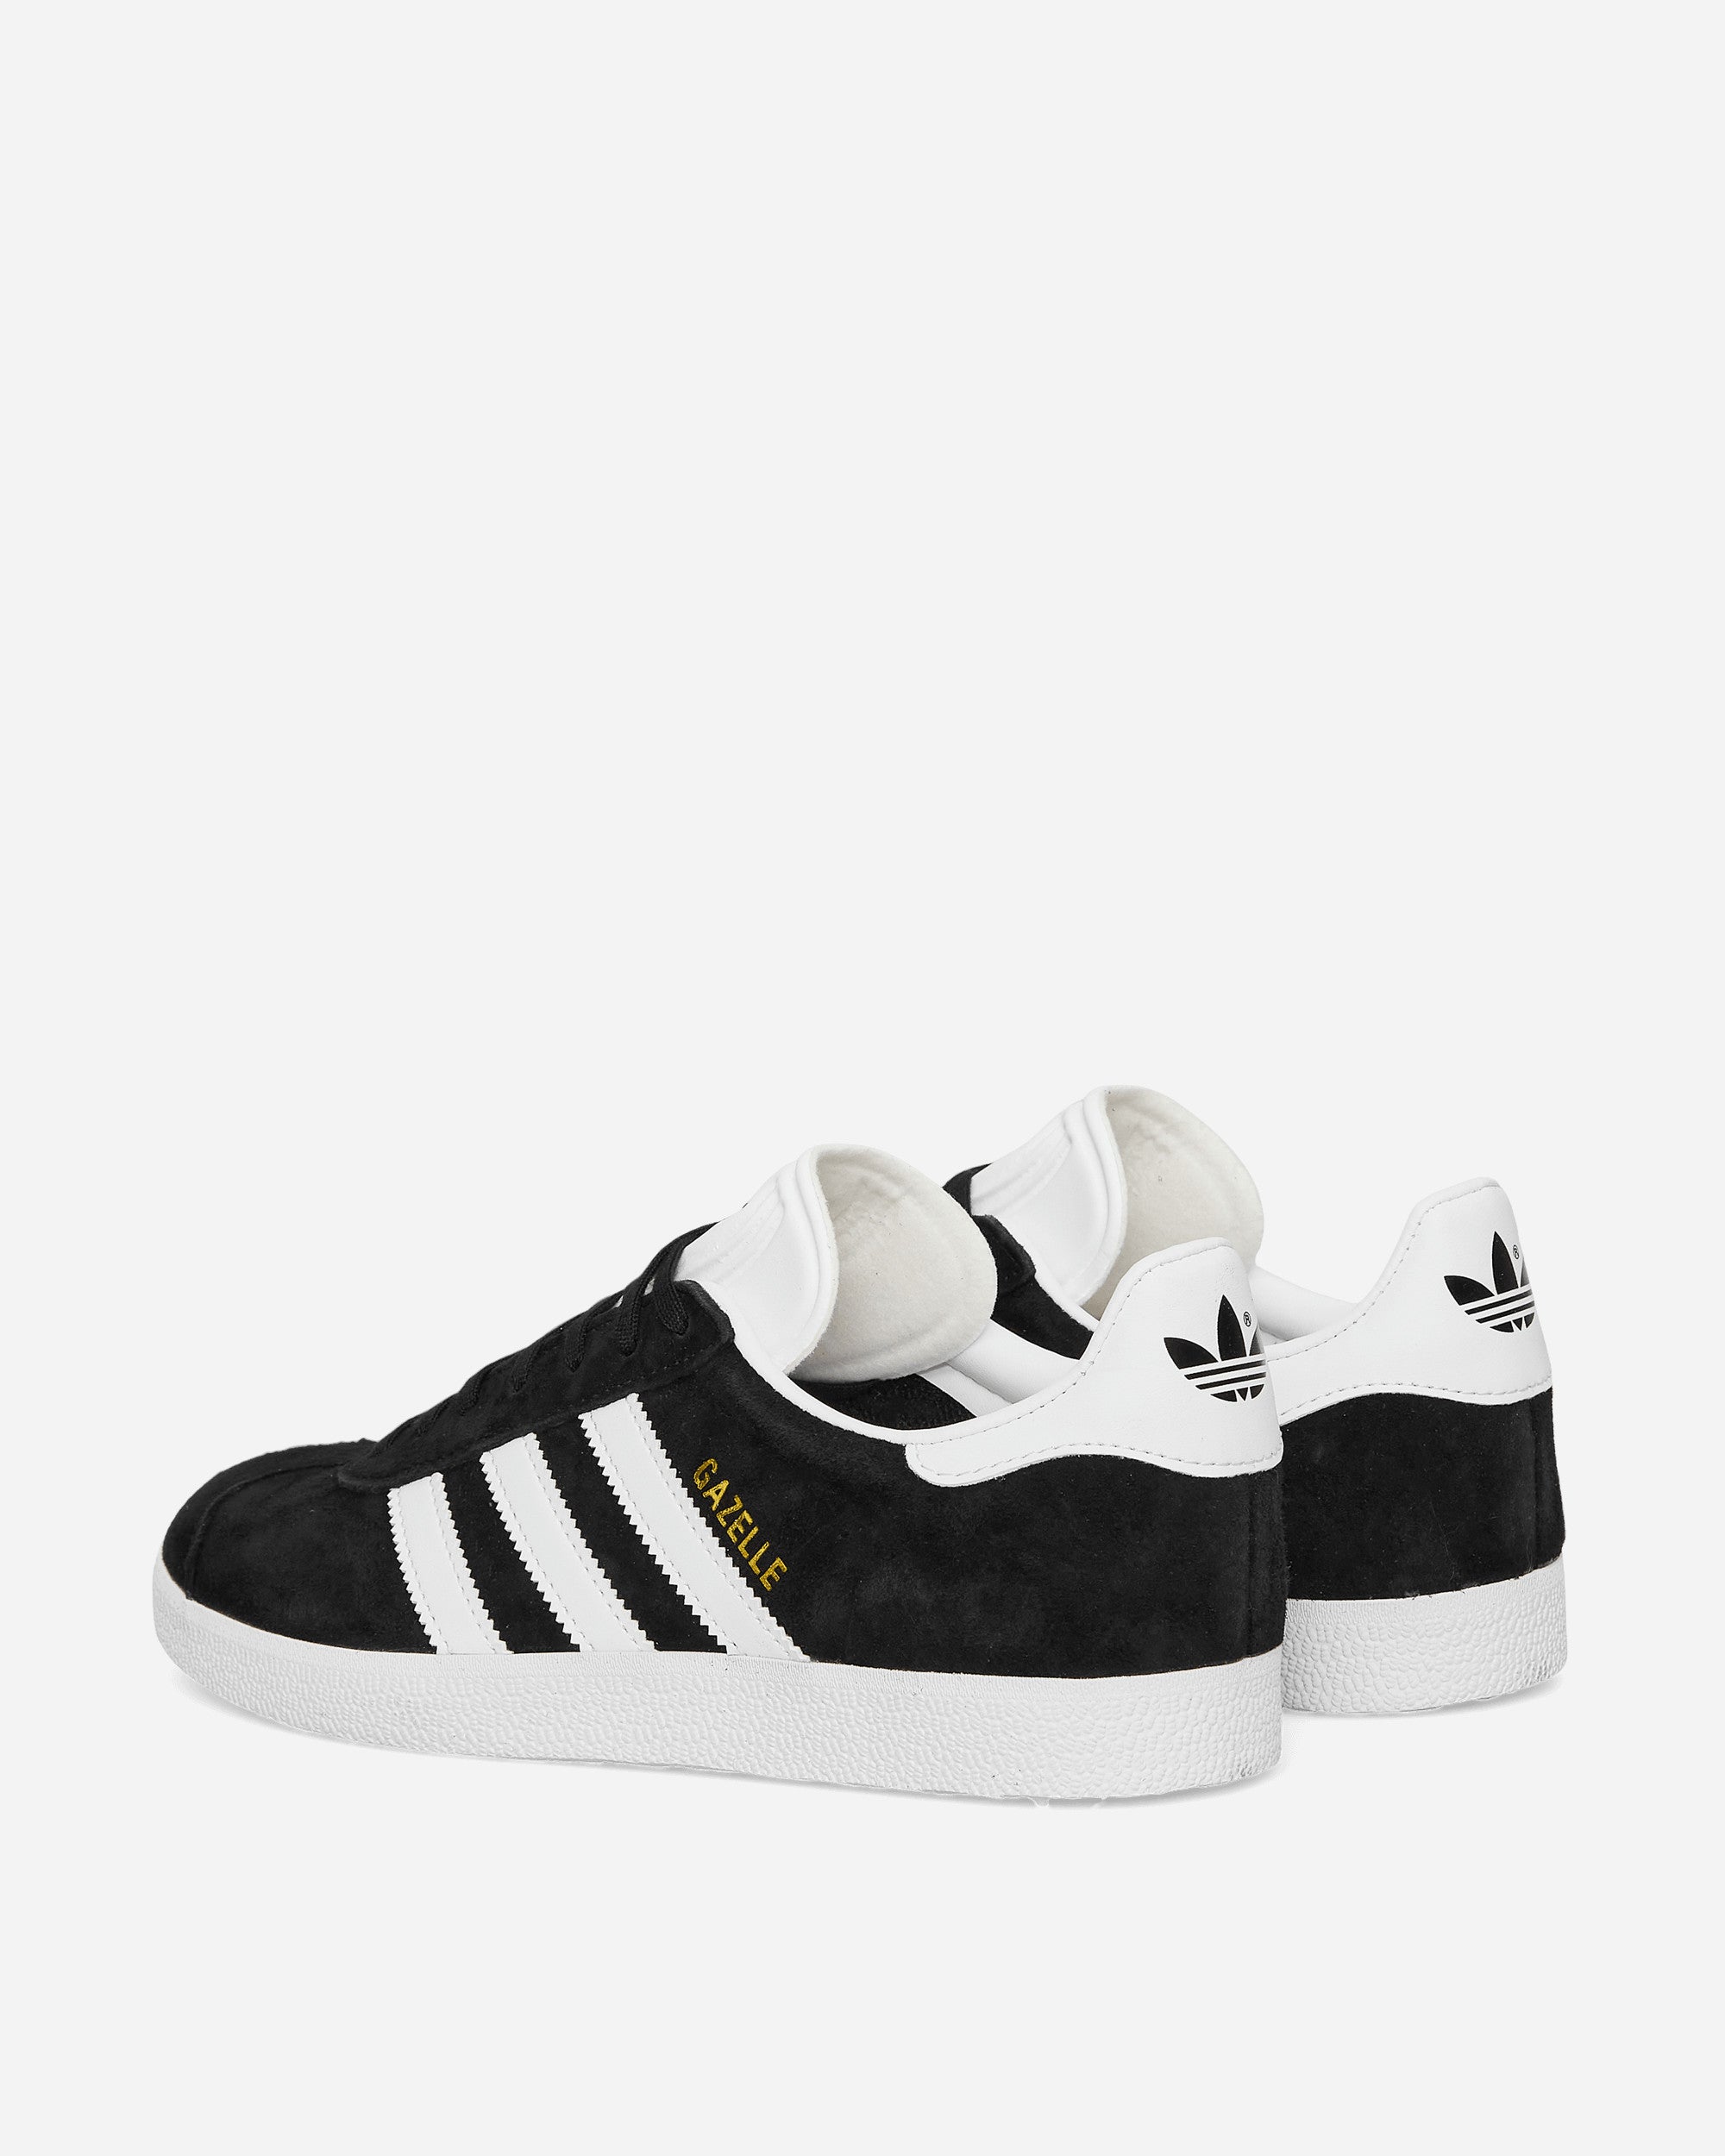 adidas Originals Gazelle Cblack/White Sneakers Low BB5476